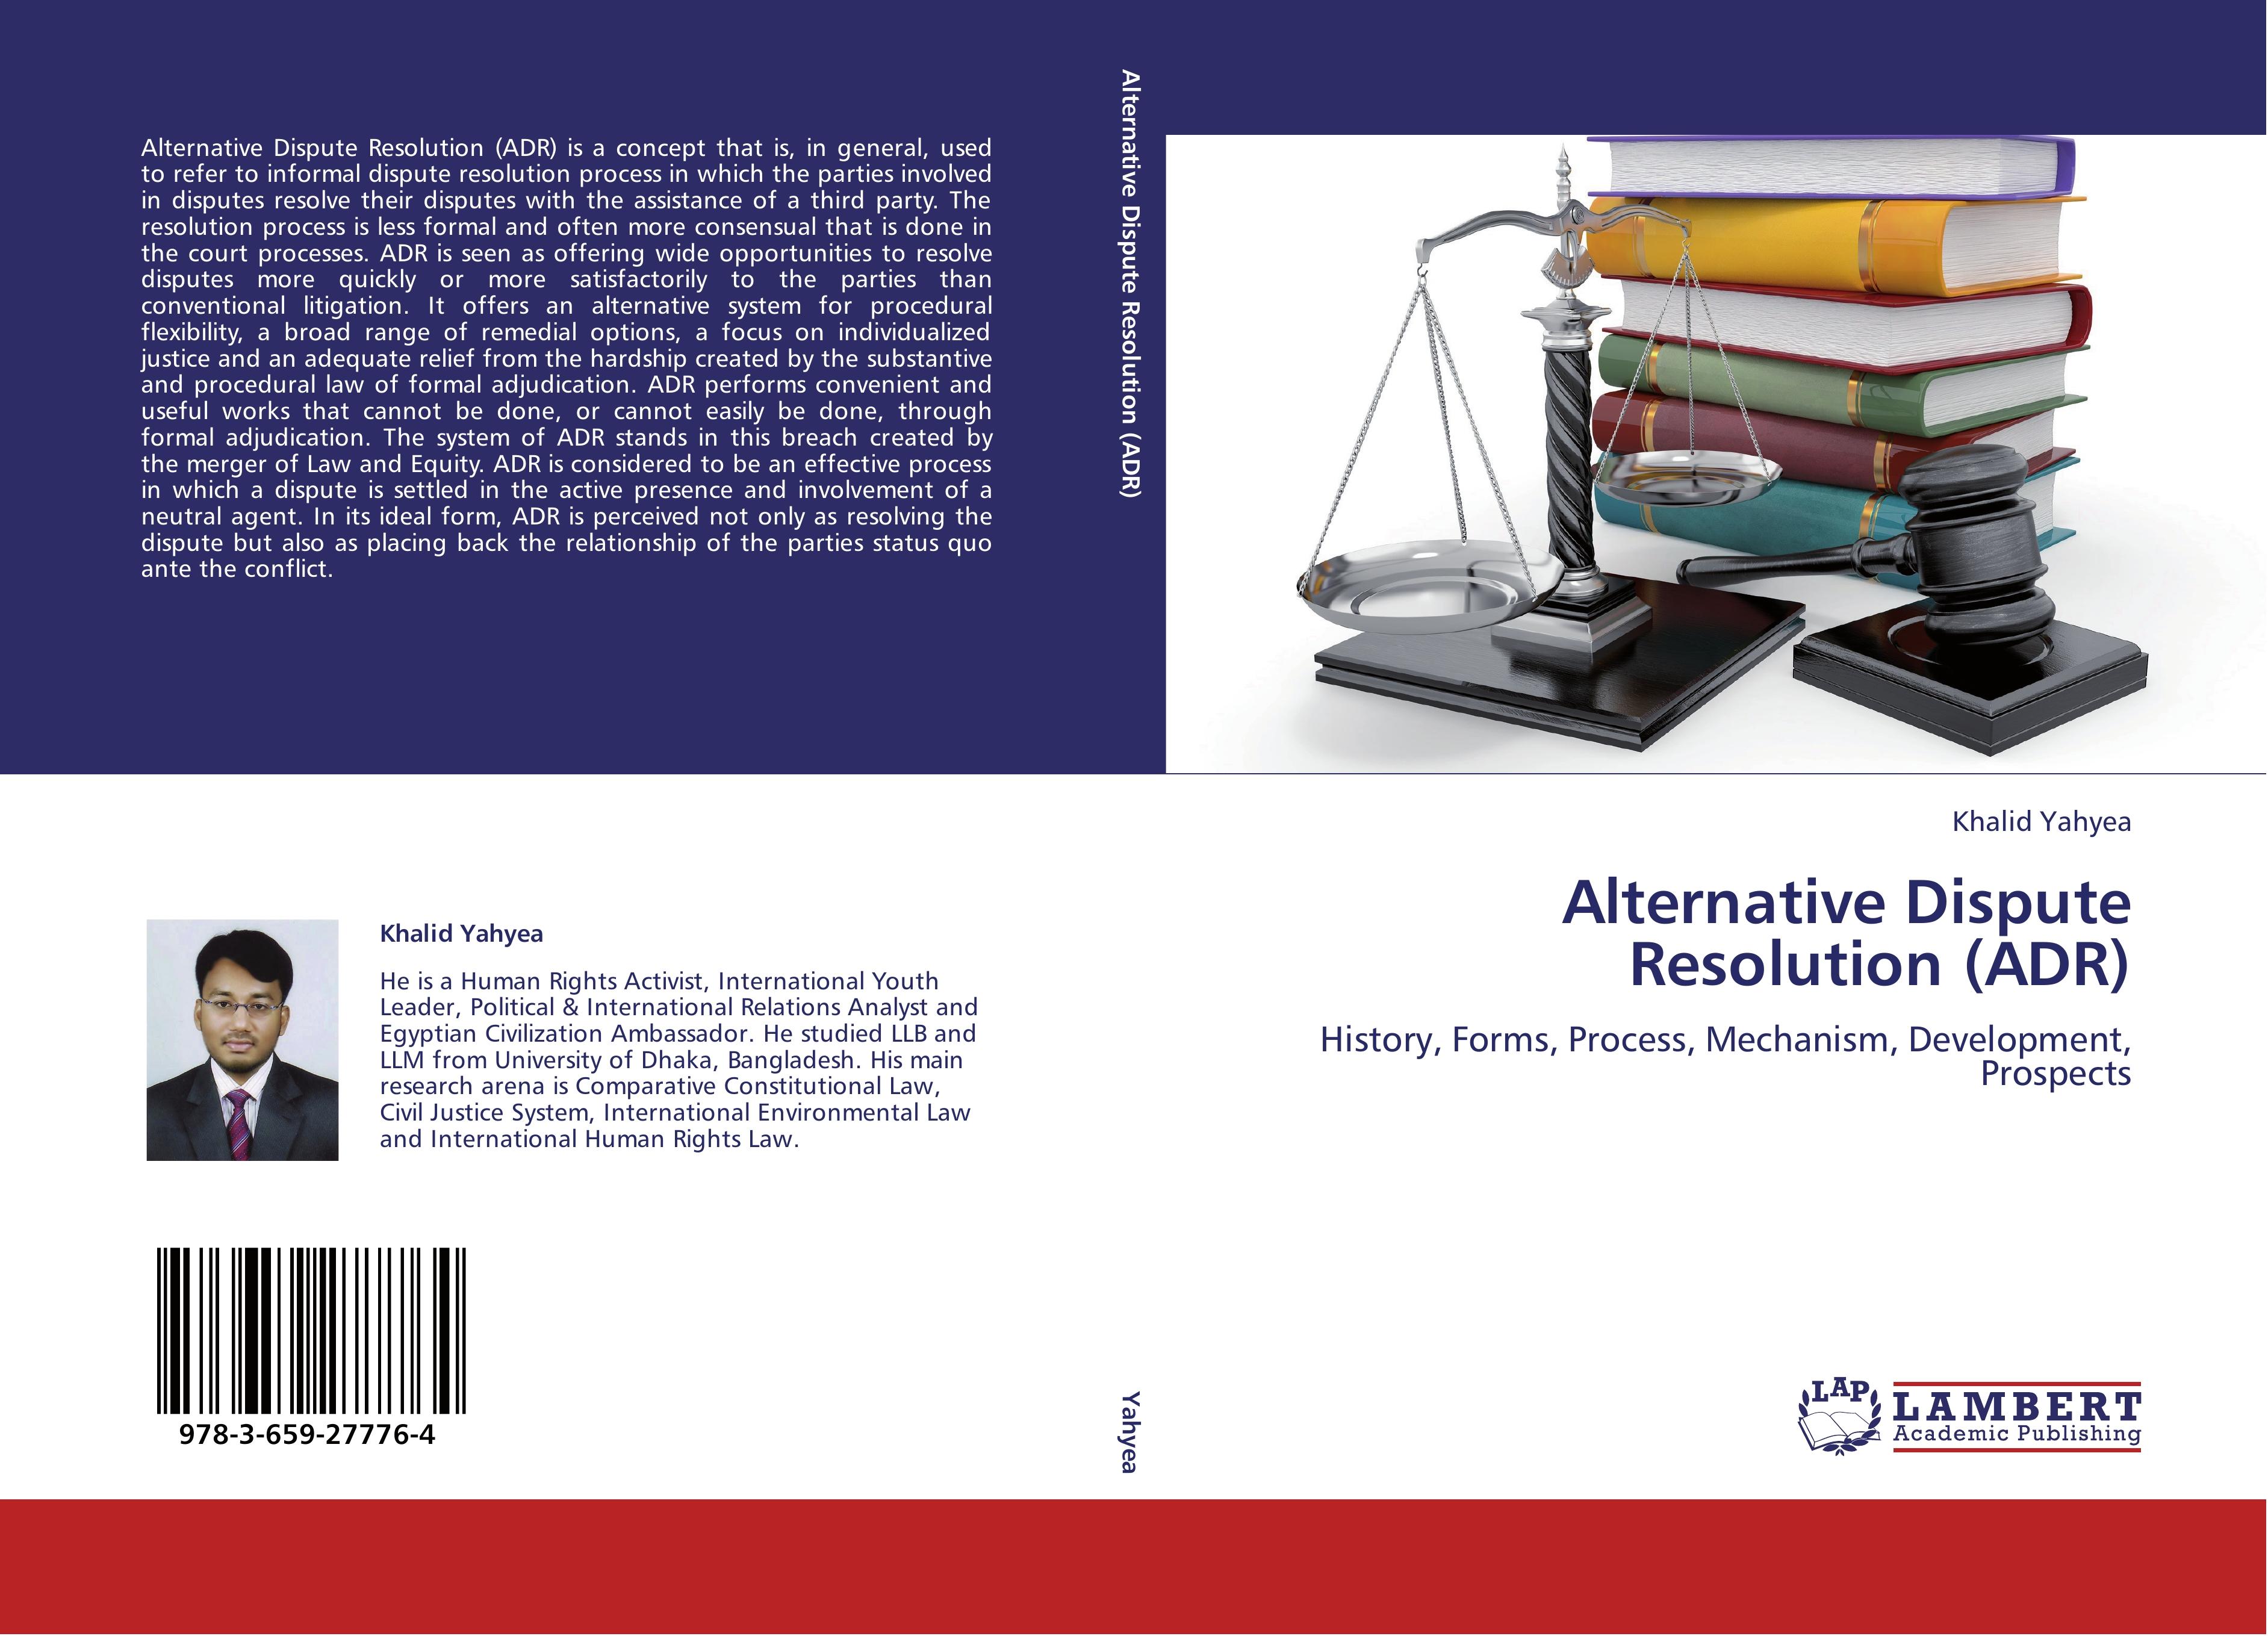 Alternative Dispute Resolution (ADR) - Khalid Yahyea